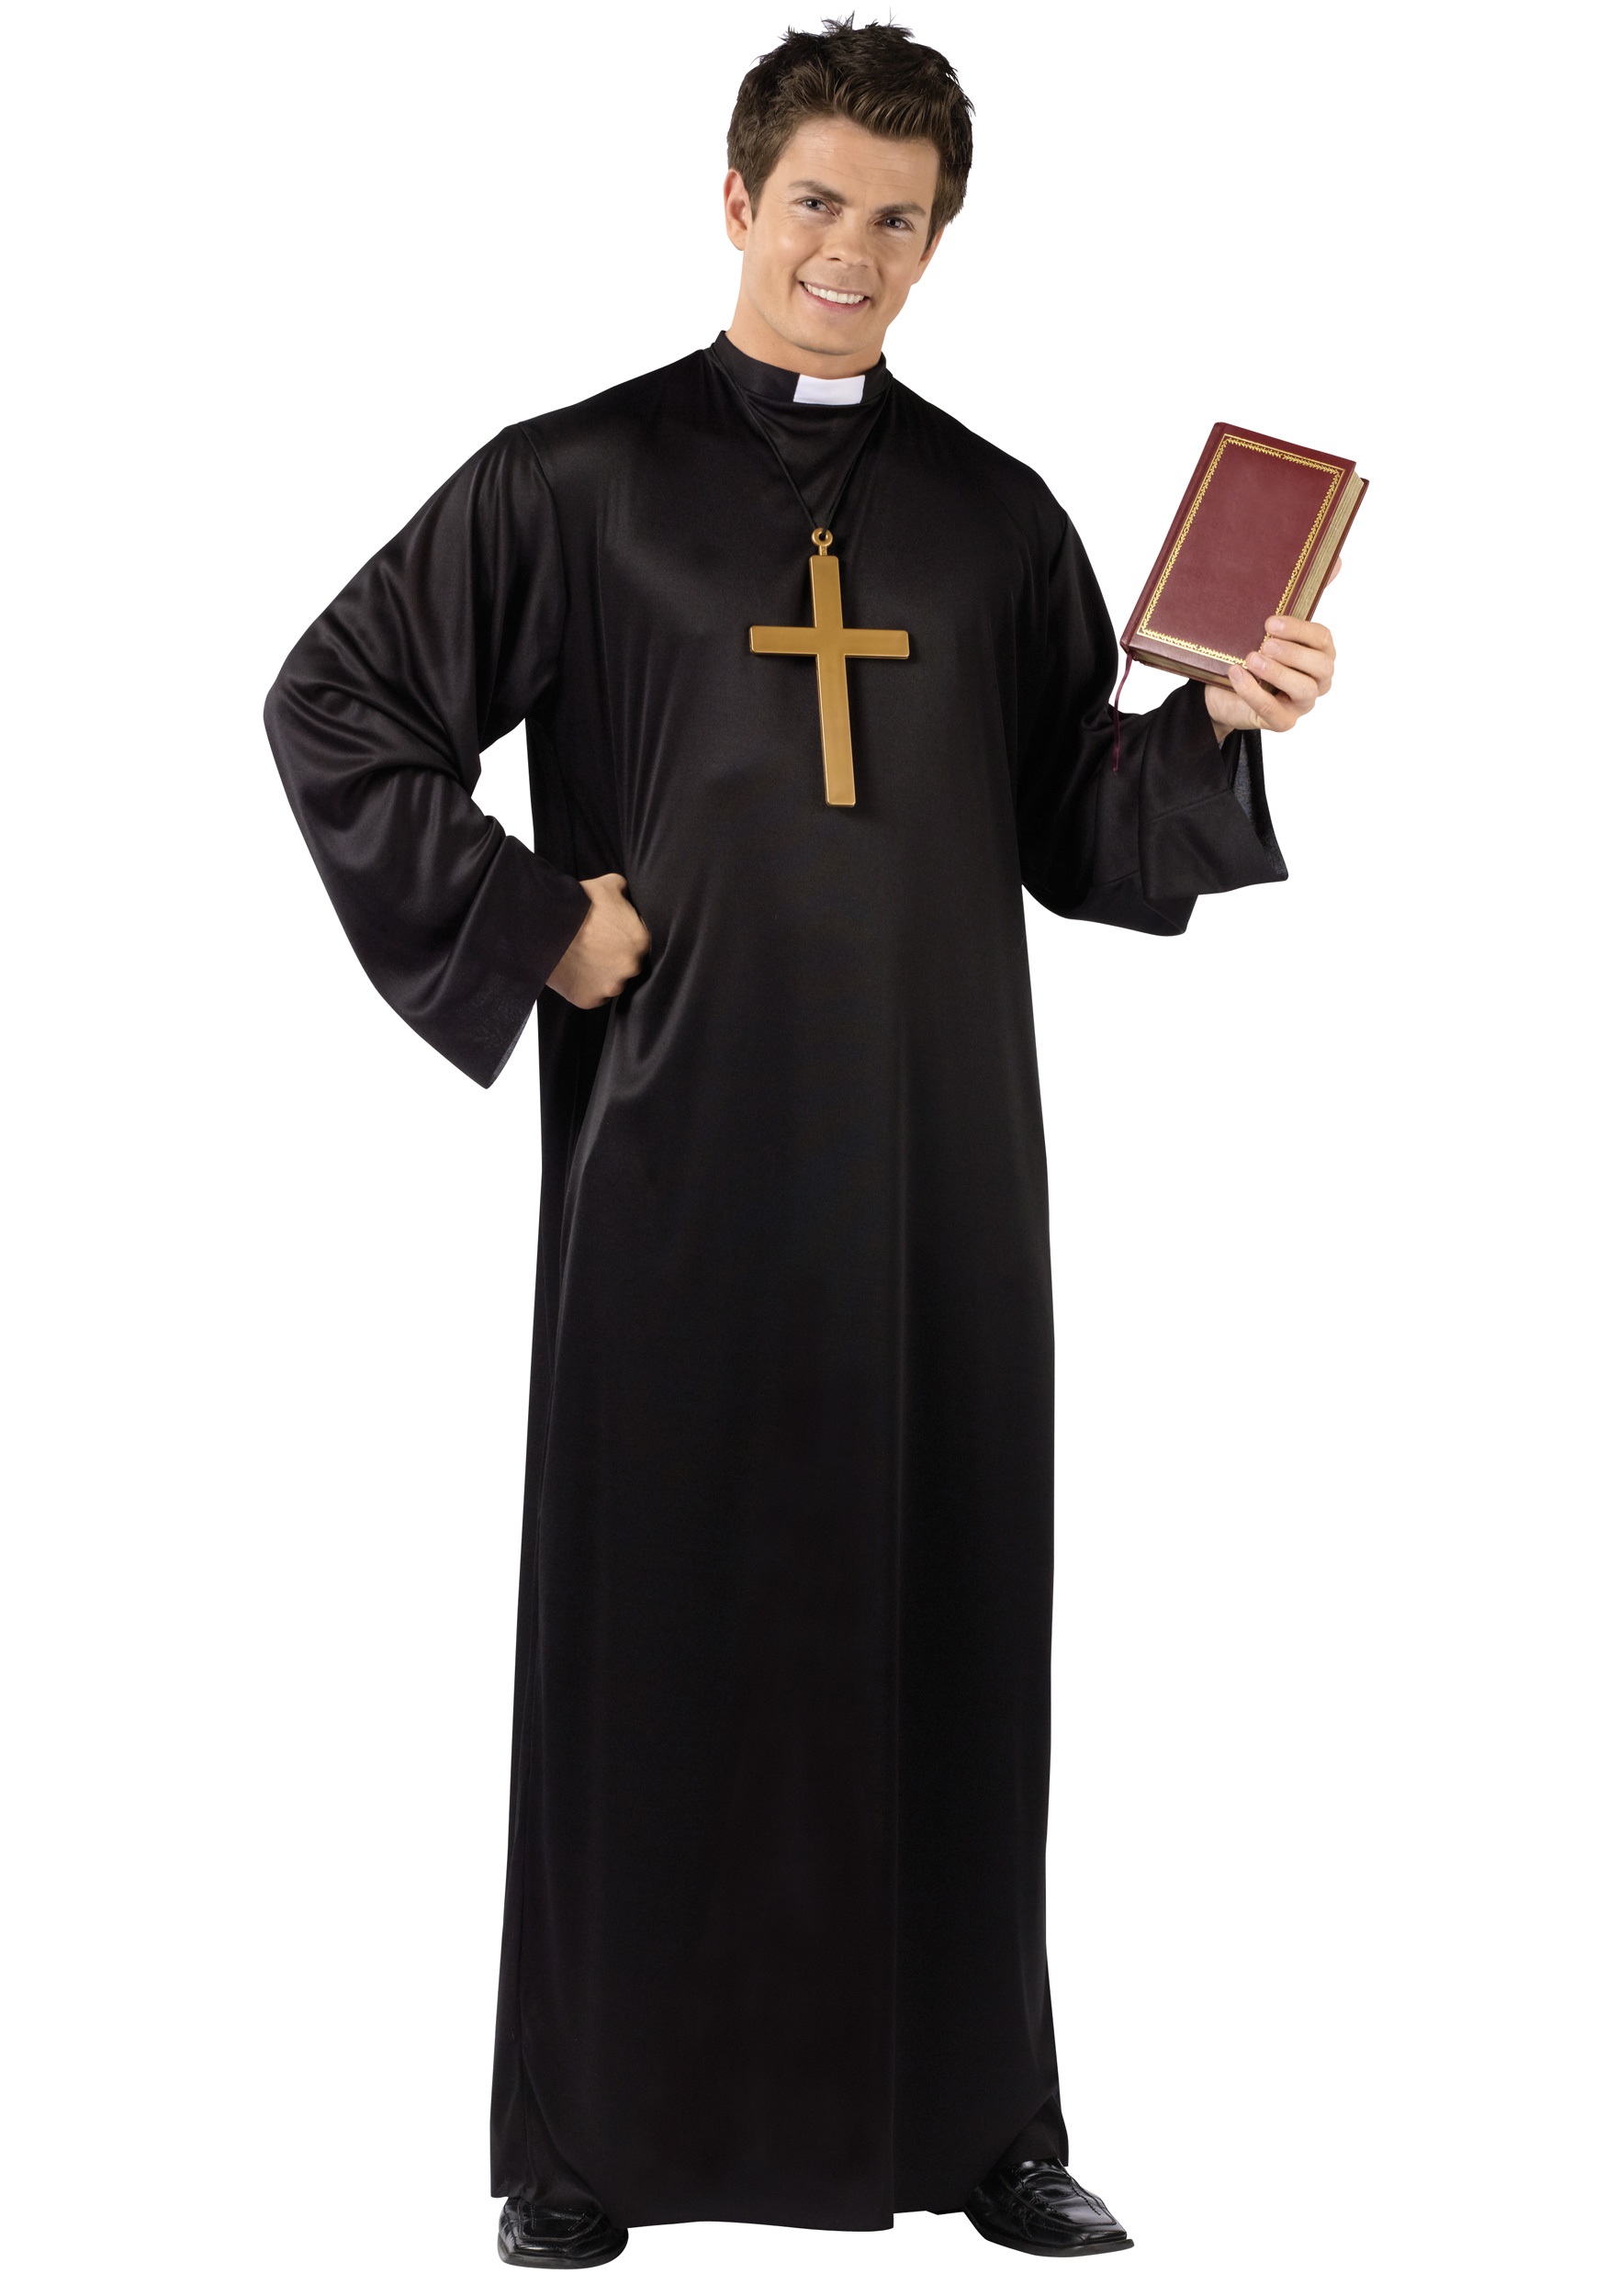 Photos - Fancy Dress Fun World Traditional Priest Men's Costume Black FU9932